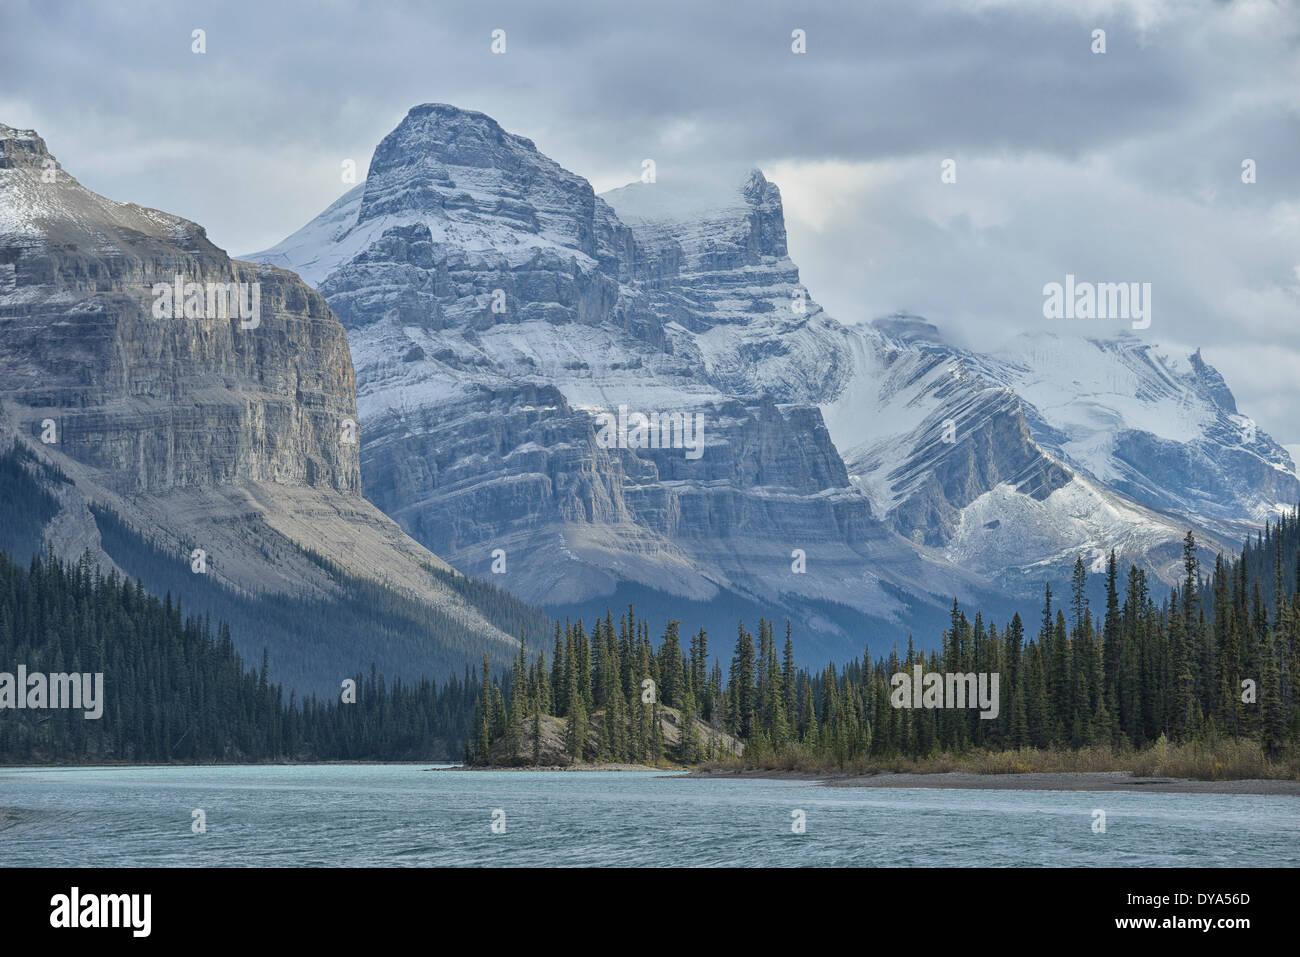 America del nord, Canada, Alberta, Rockies, Canadian Rockies, montagne rocciose, maligne, lago, scenario, UNESCO Patrimonio Mondiale Foto Stock